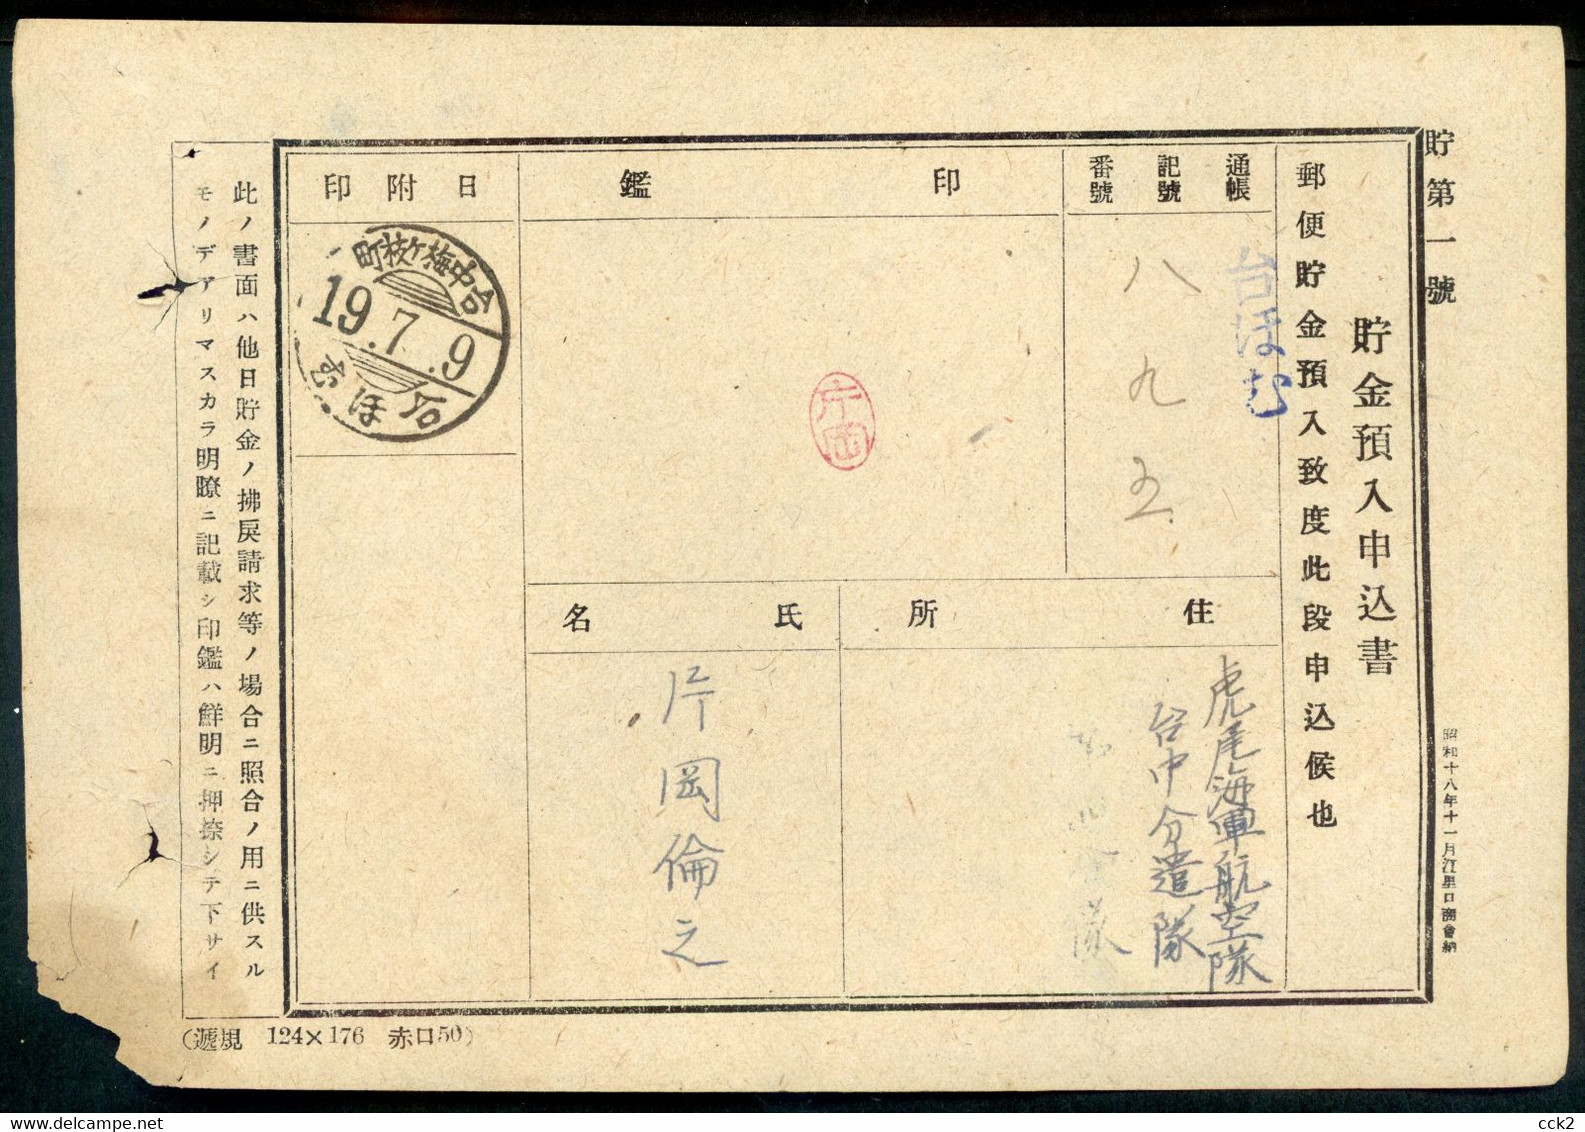 JAPAN OCCUPATION TAIWAN- Postal Convenience Savings Fund Advance Deposit Application Form (2) - 1945 Japanese Occupation